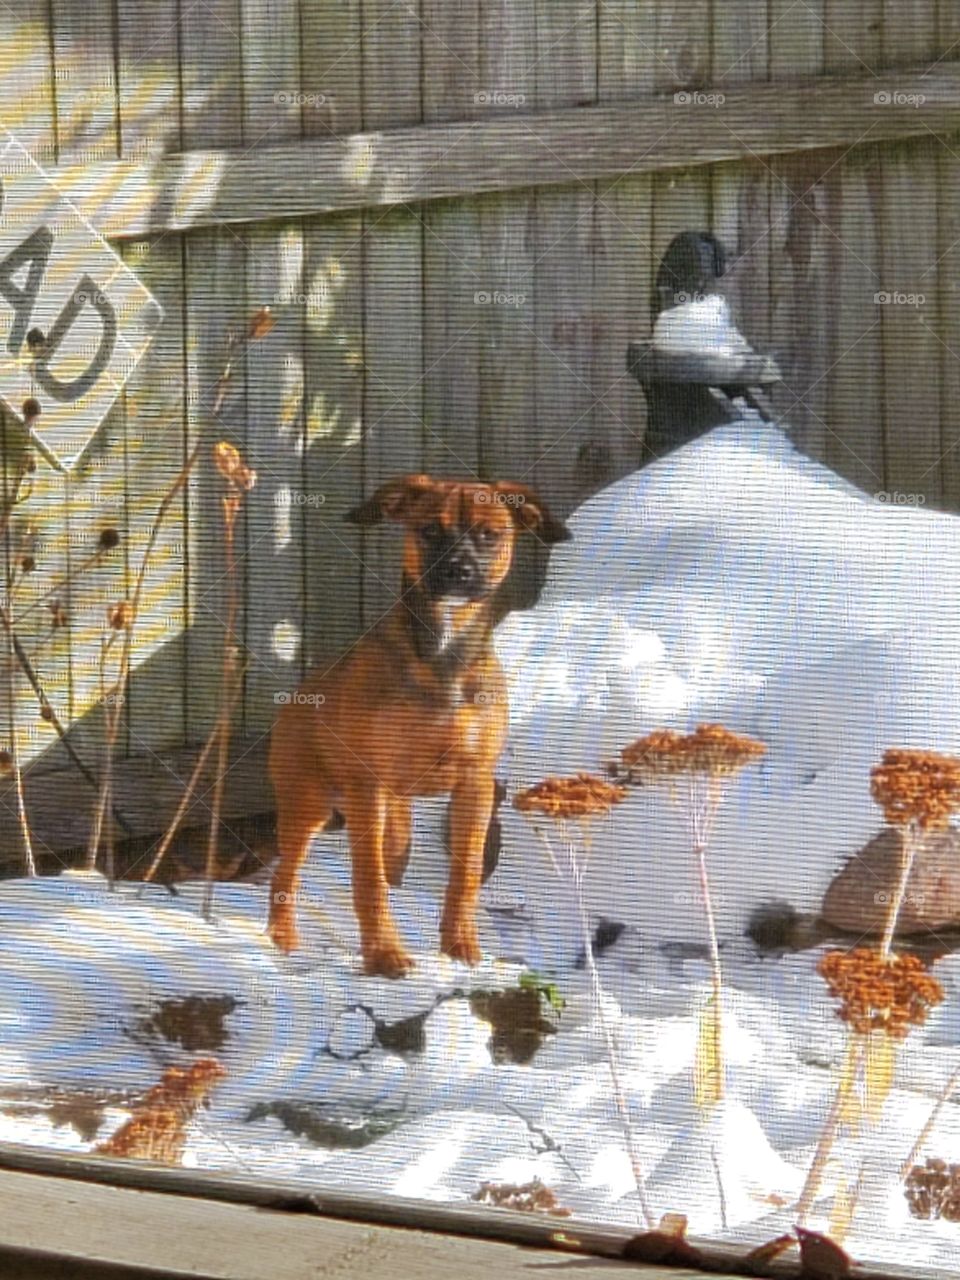 Dog loving the snow